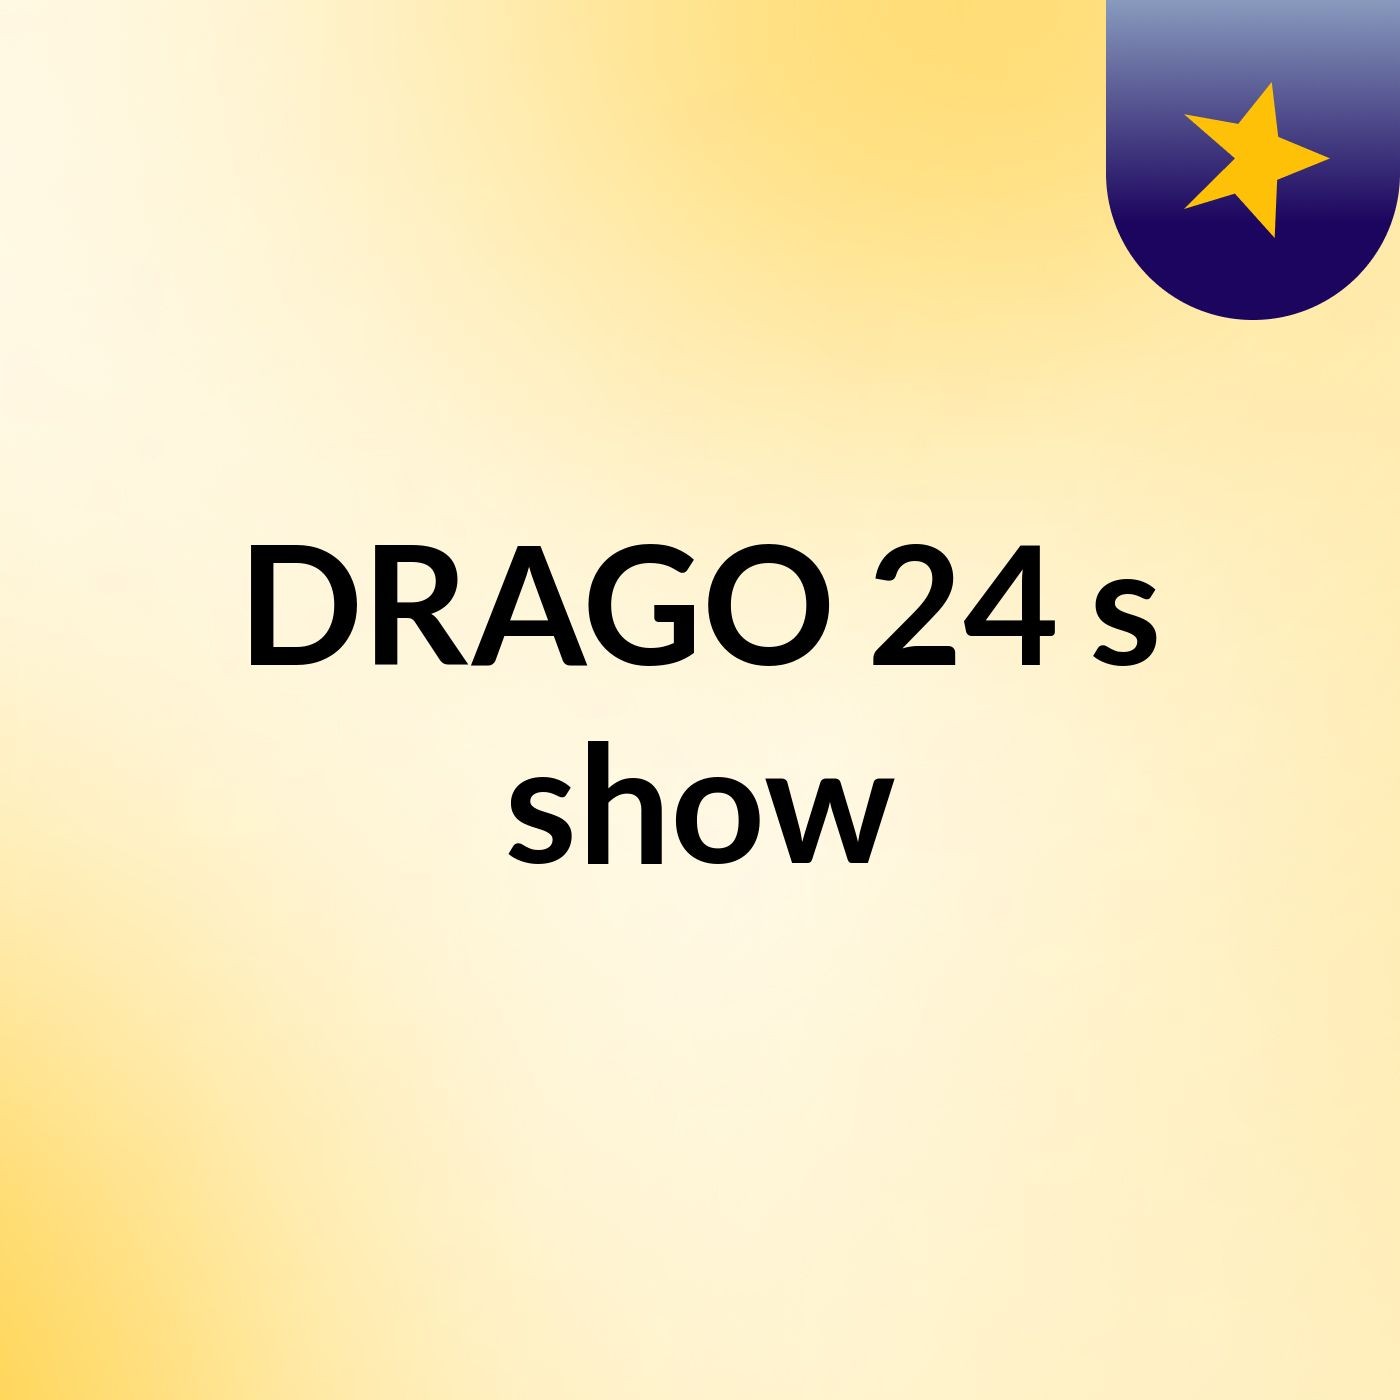 DRAGO 24's show